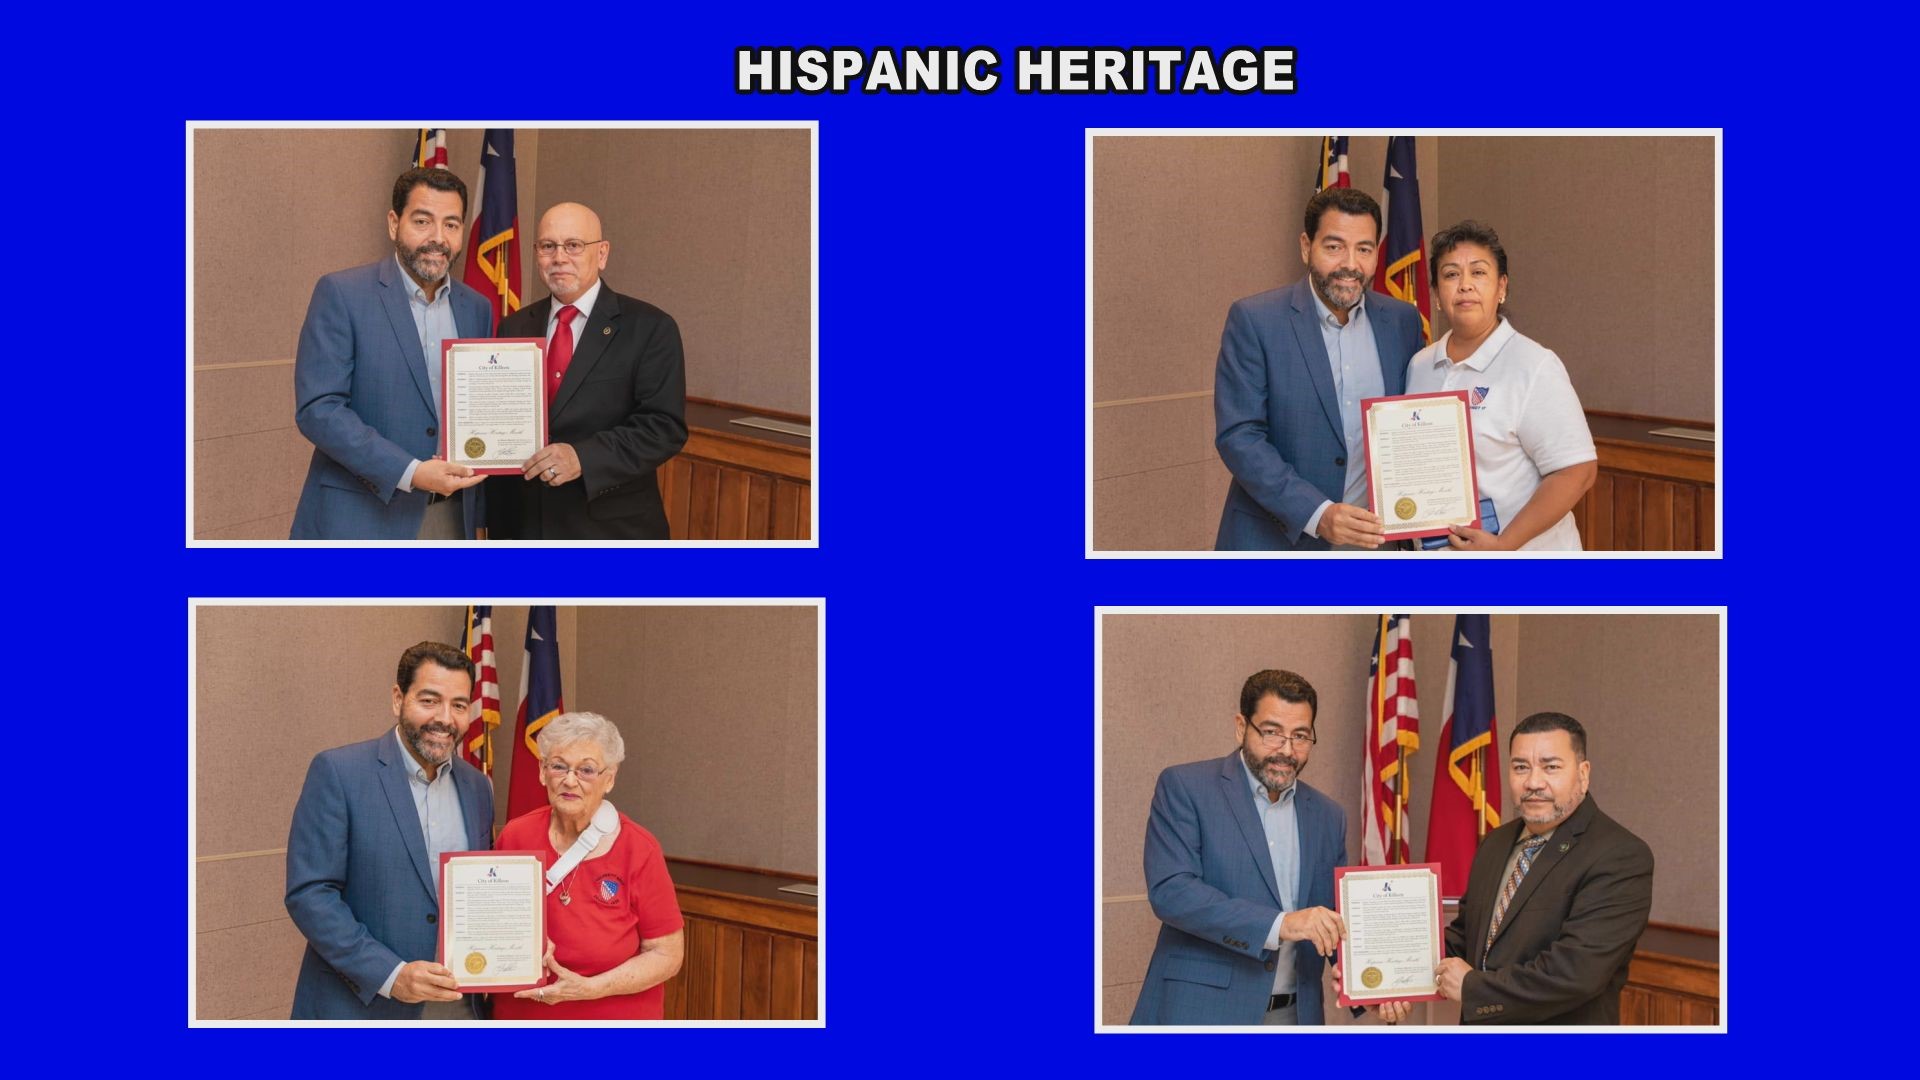 Killeen Mayor Jose Segarra hosted a ceremony to show the city's appreciation of the Hispanic community and local Hispanic organizations.